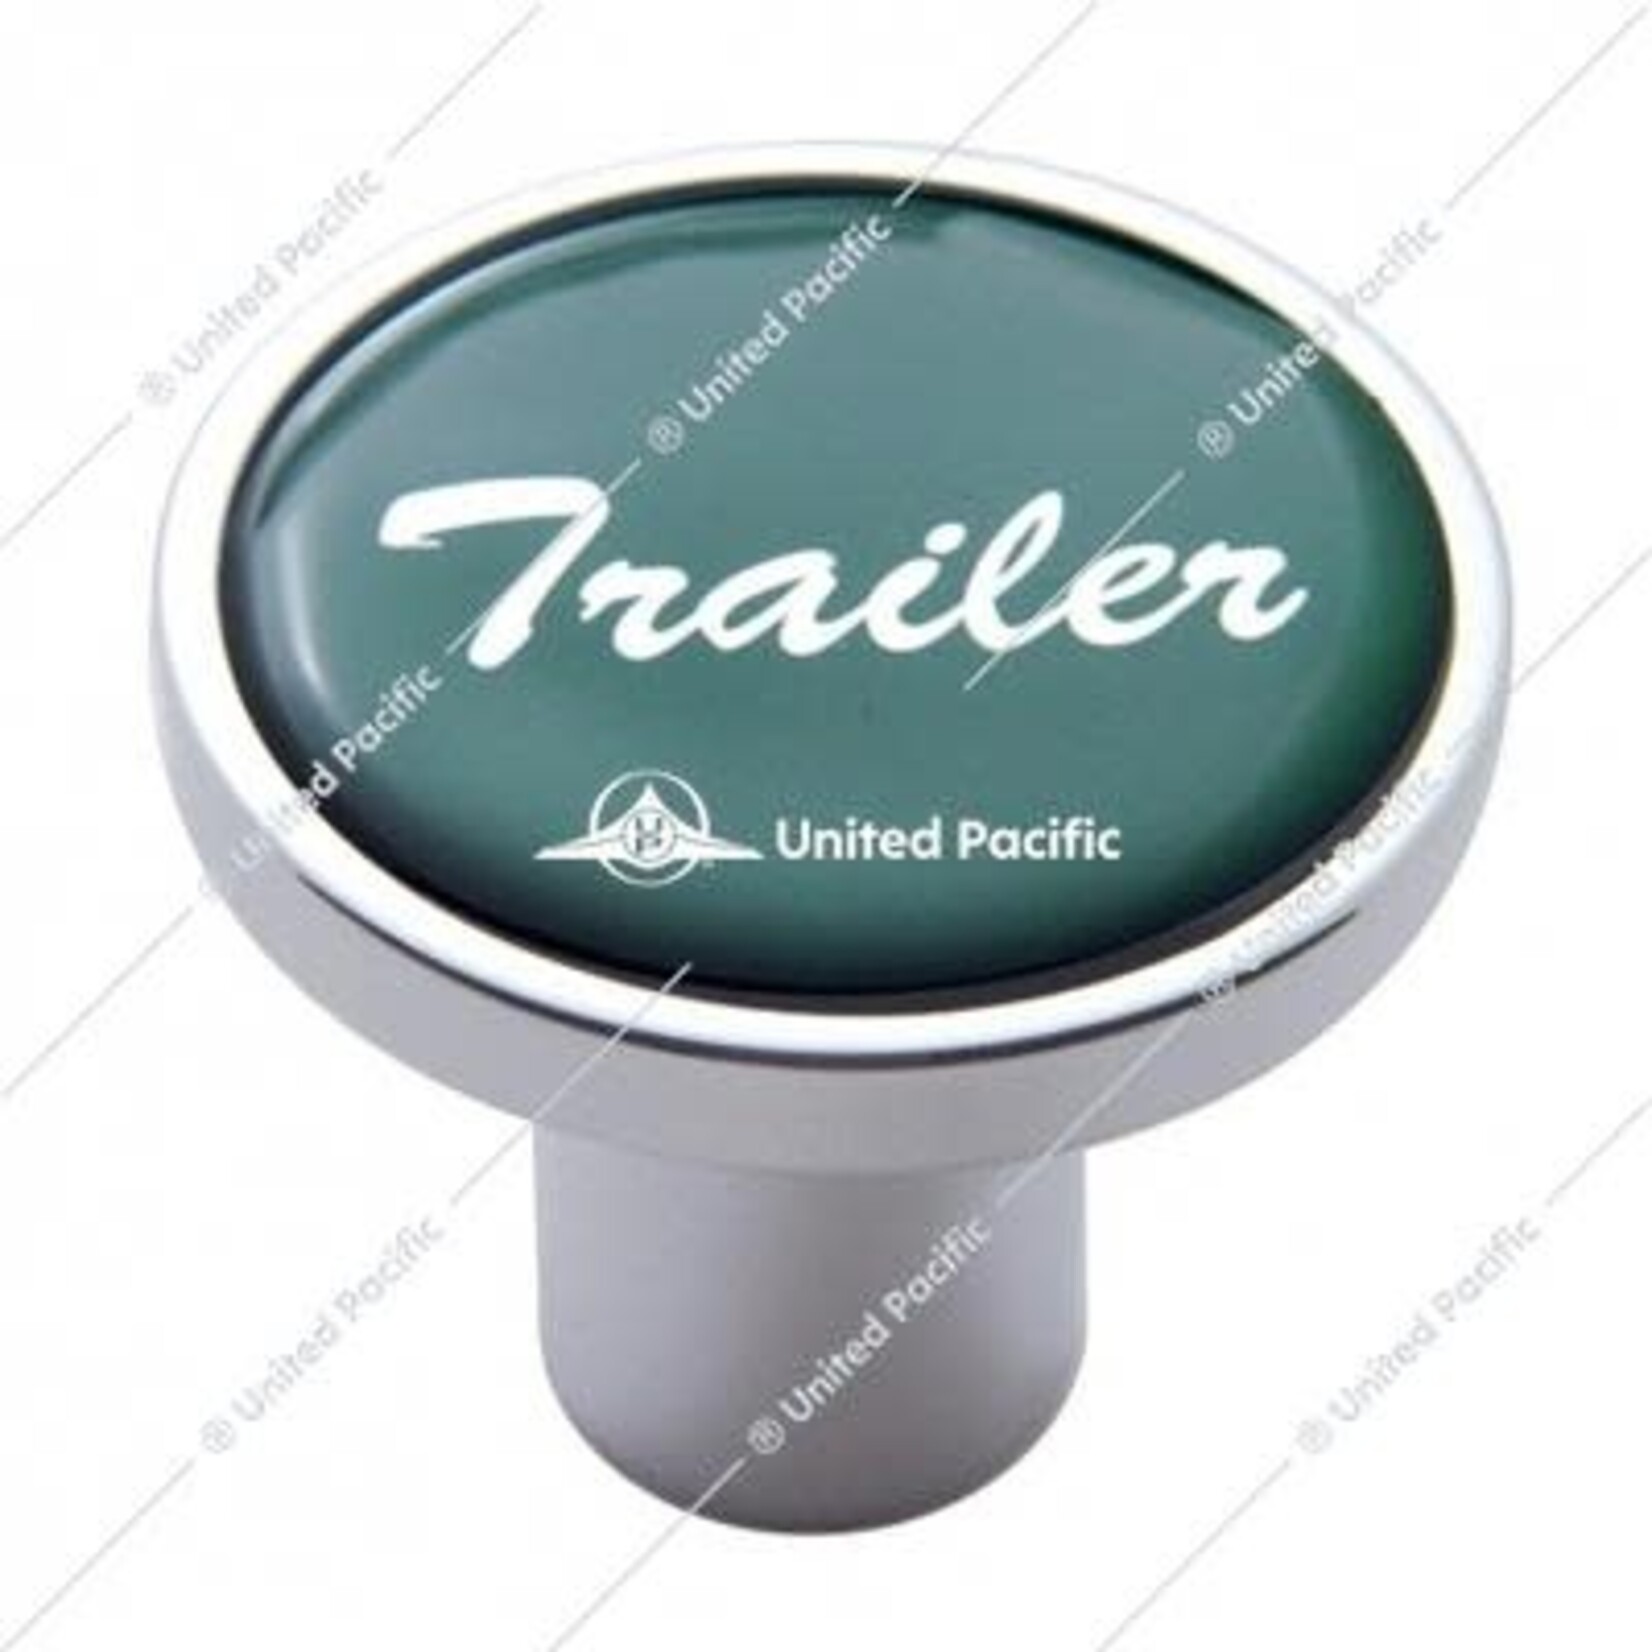 "Trailer" Air Valve Knob - Green Glossy Sticker